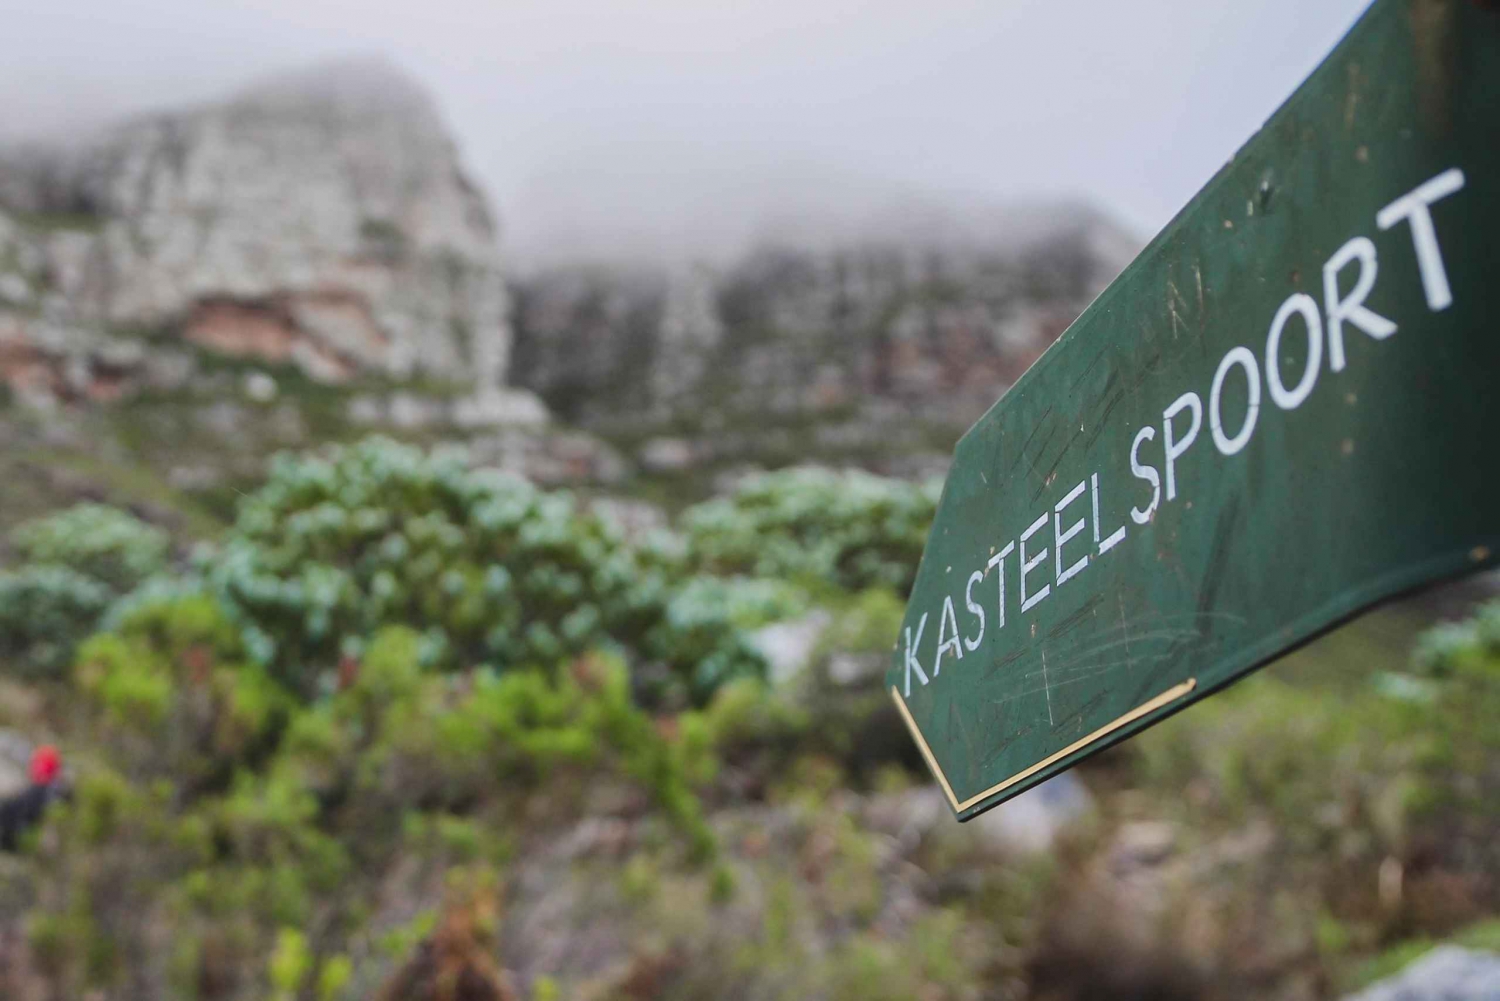 Tafelberg: Kasteelspoort zur oberen Seilbahnstation.